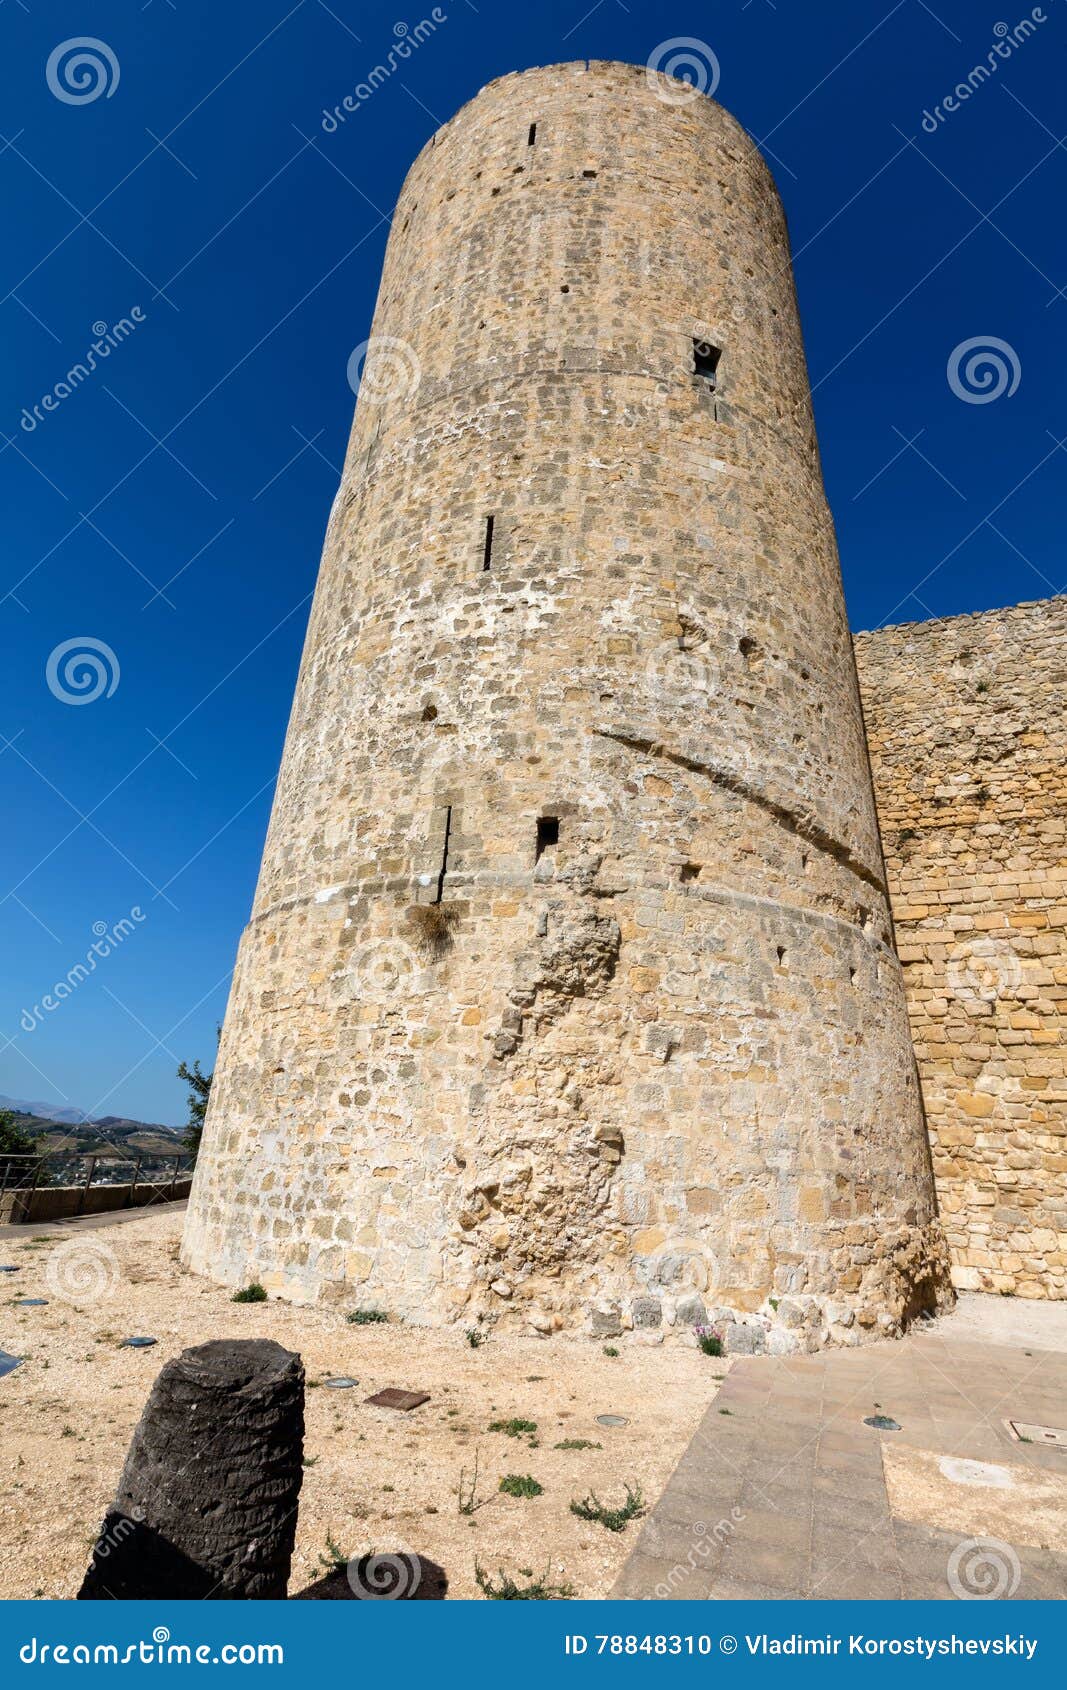 norman castle of salemi